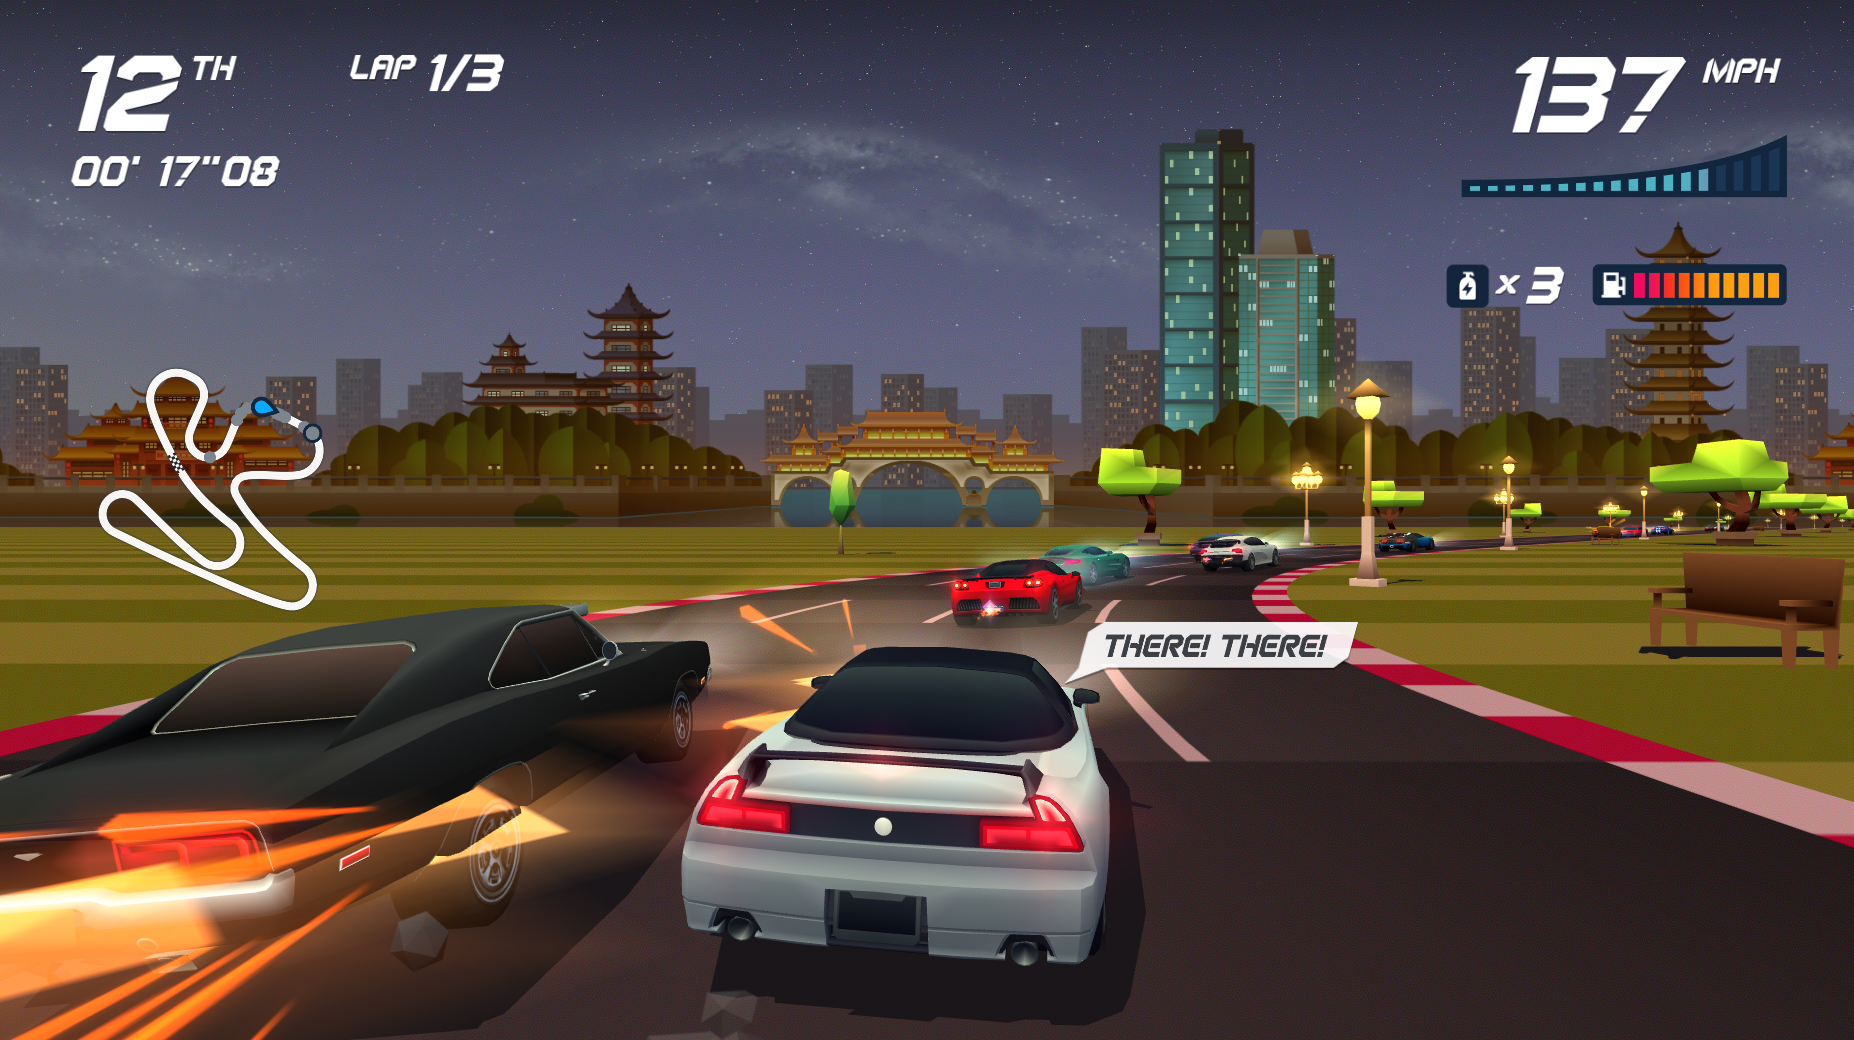 GTA 5 Gameplay Race, Chasing, Video game